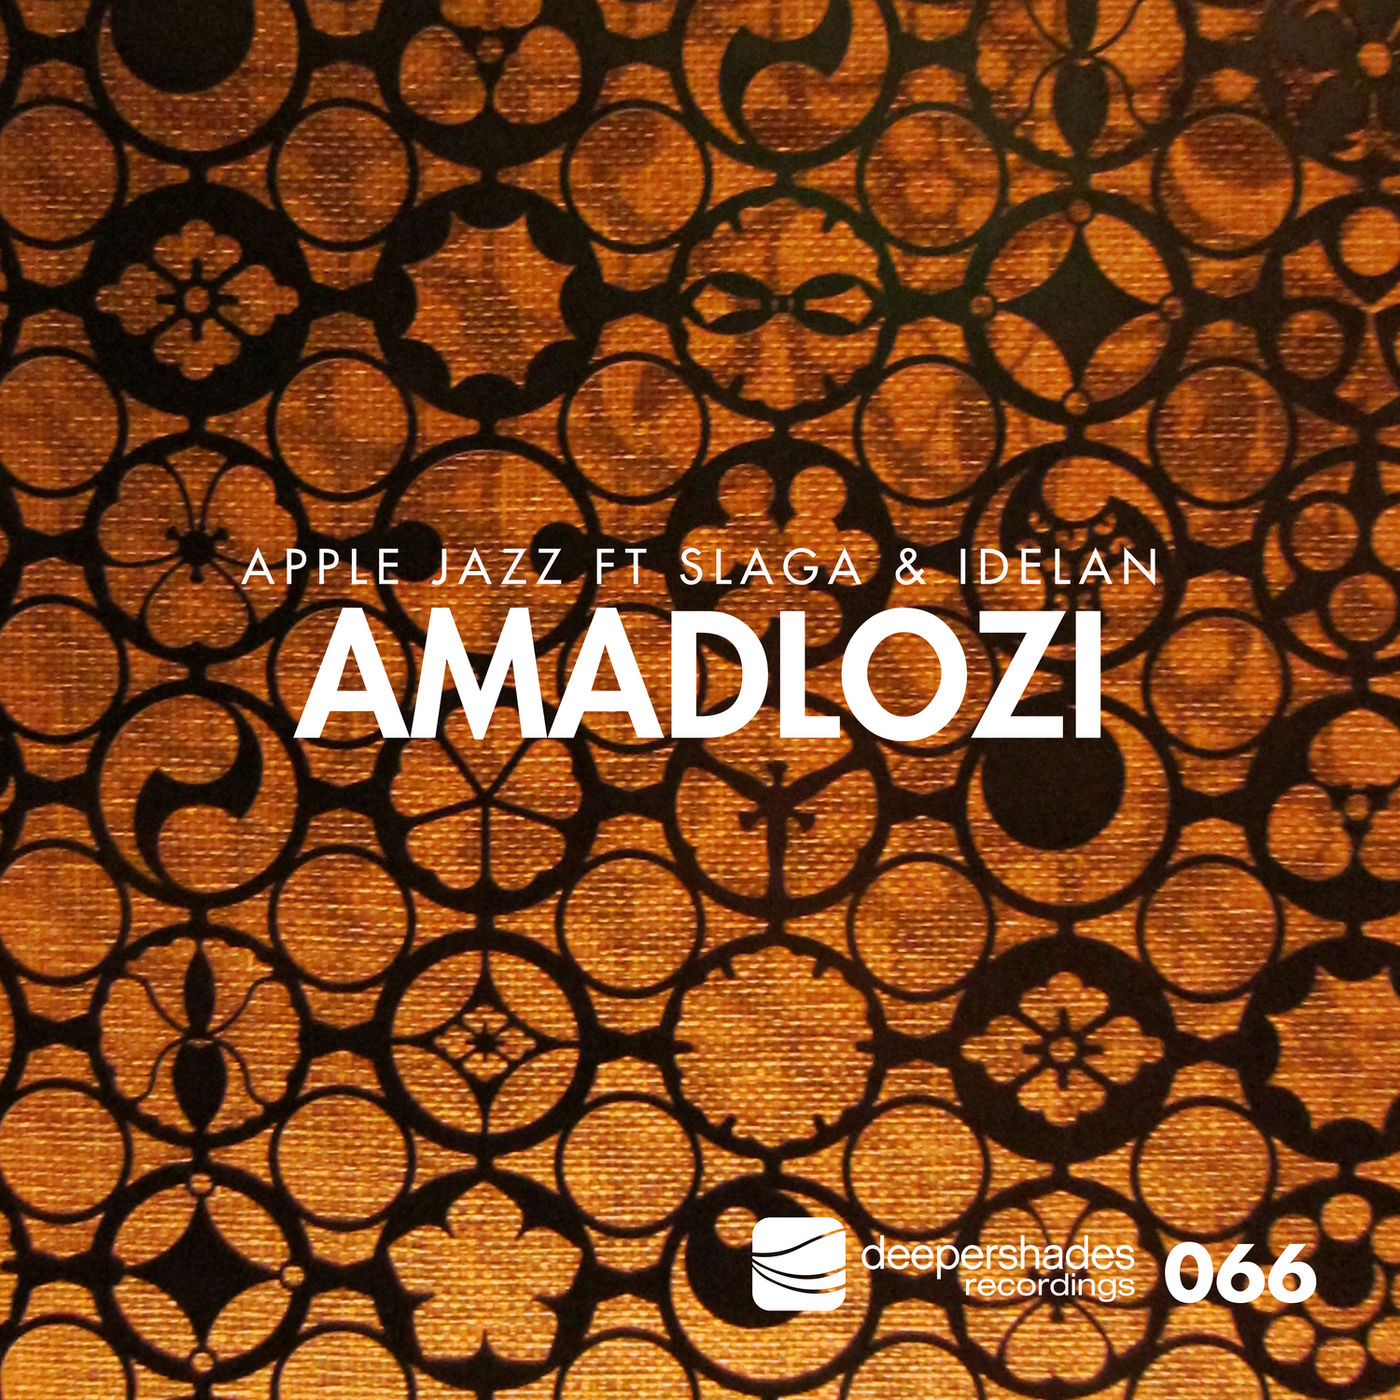 Apple Jazz ft Slaga & Idelan - Amadlozi / Deeper Shades Recordings